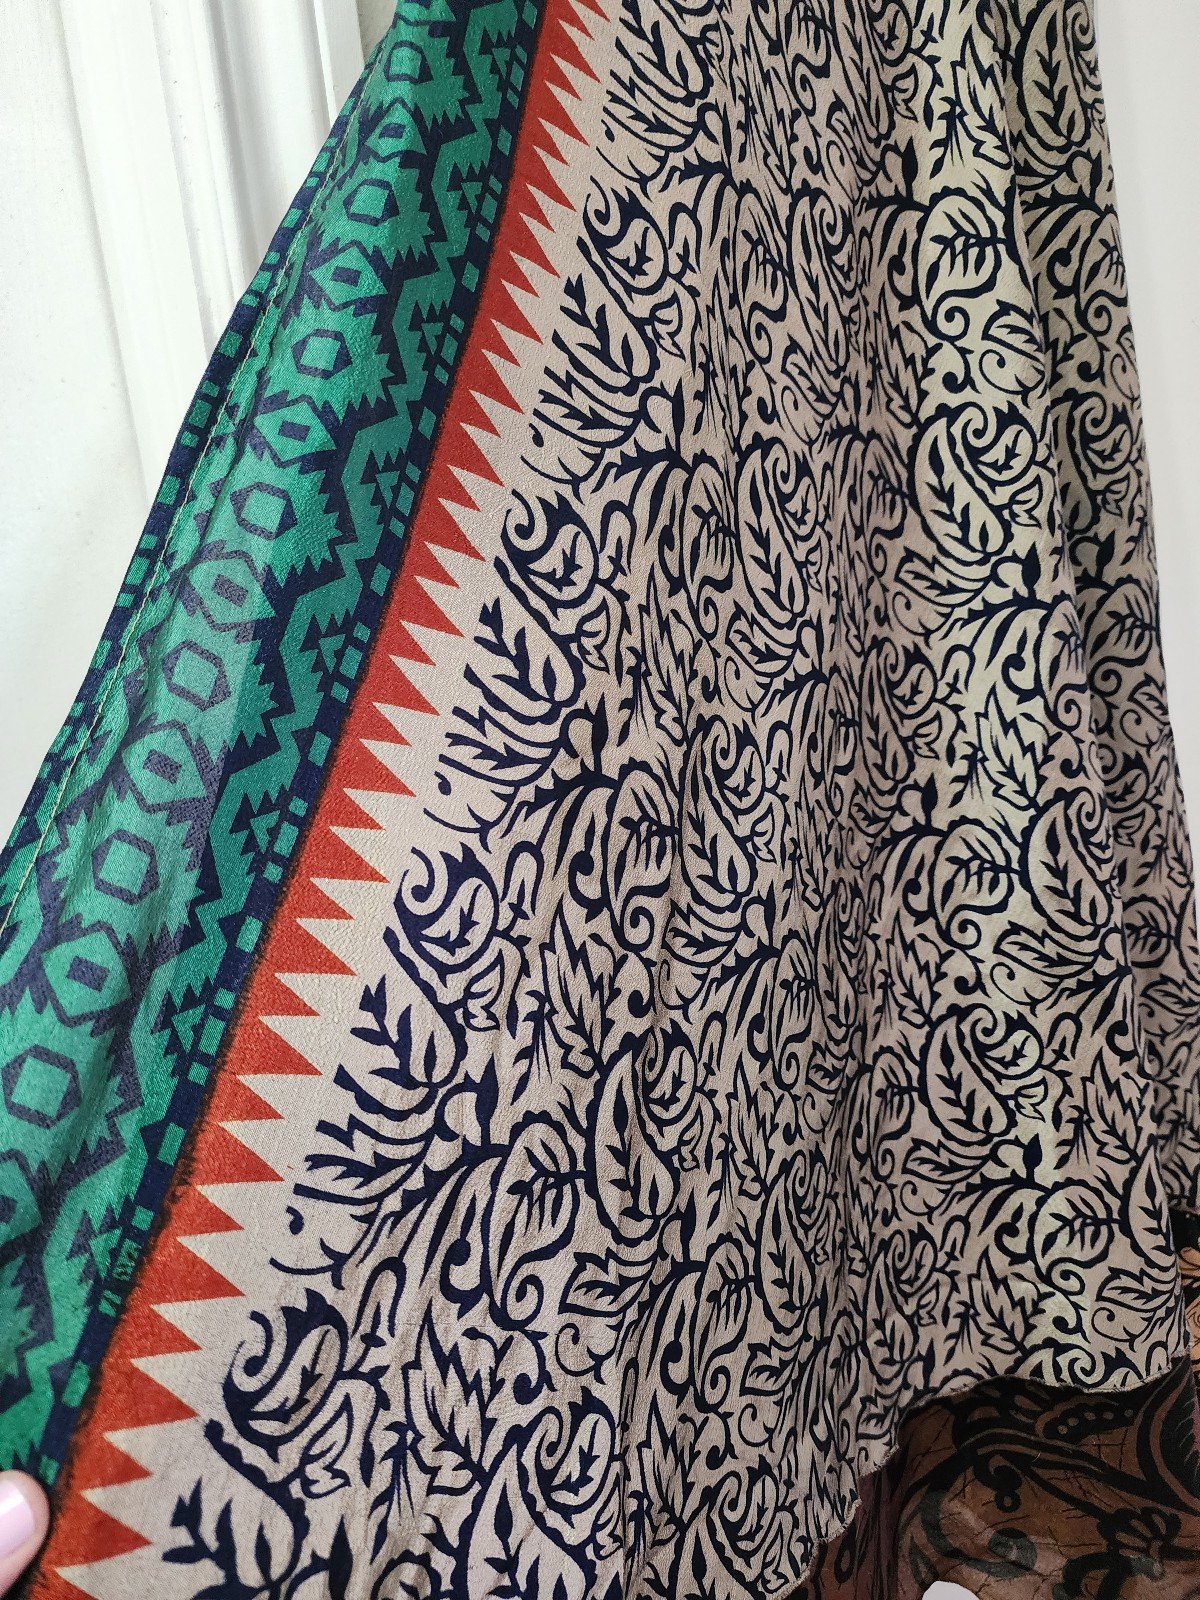 The Best Seller Recycled Sari Wrap Skirt JIUMB8zU3 best sale